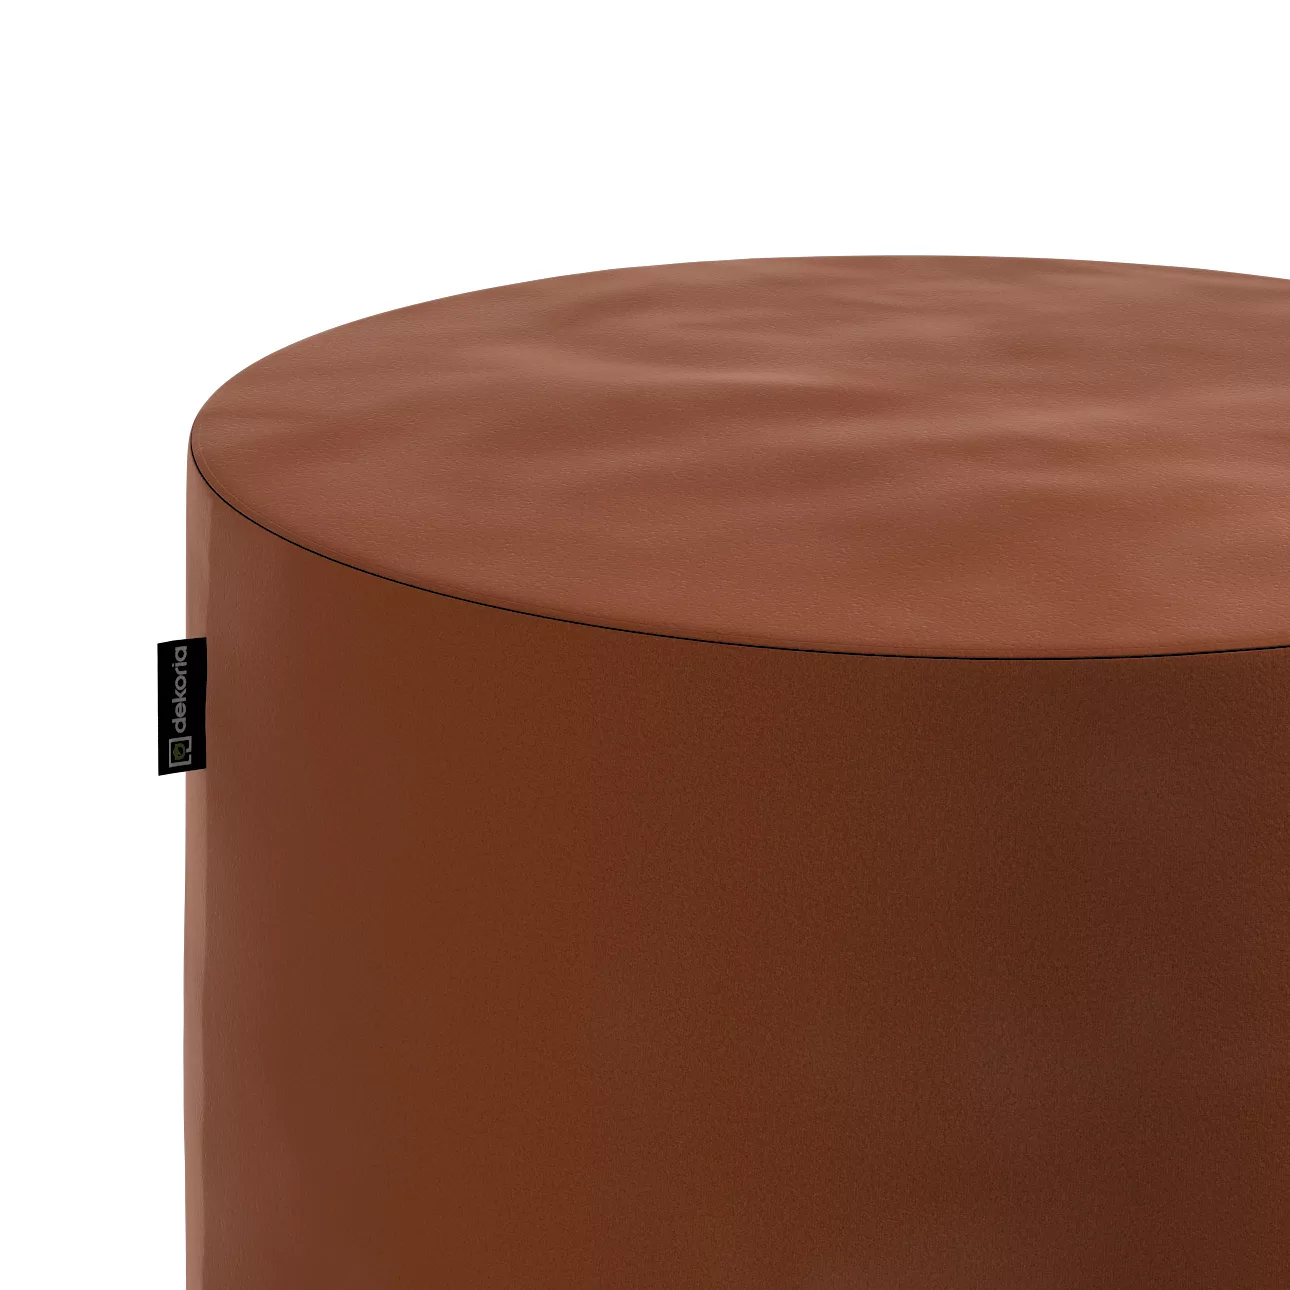 Pouf Barrel, braun-karamell, ø40 cm x 40 cm, Velvet (704-33) günstig online kaufen